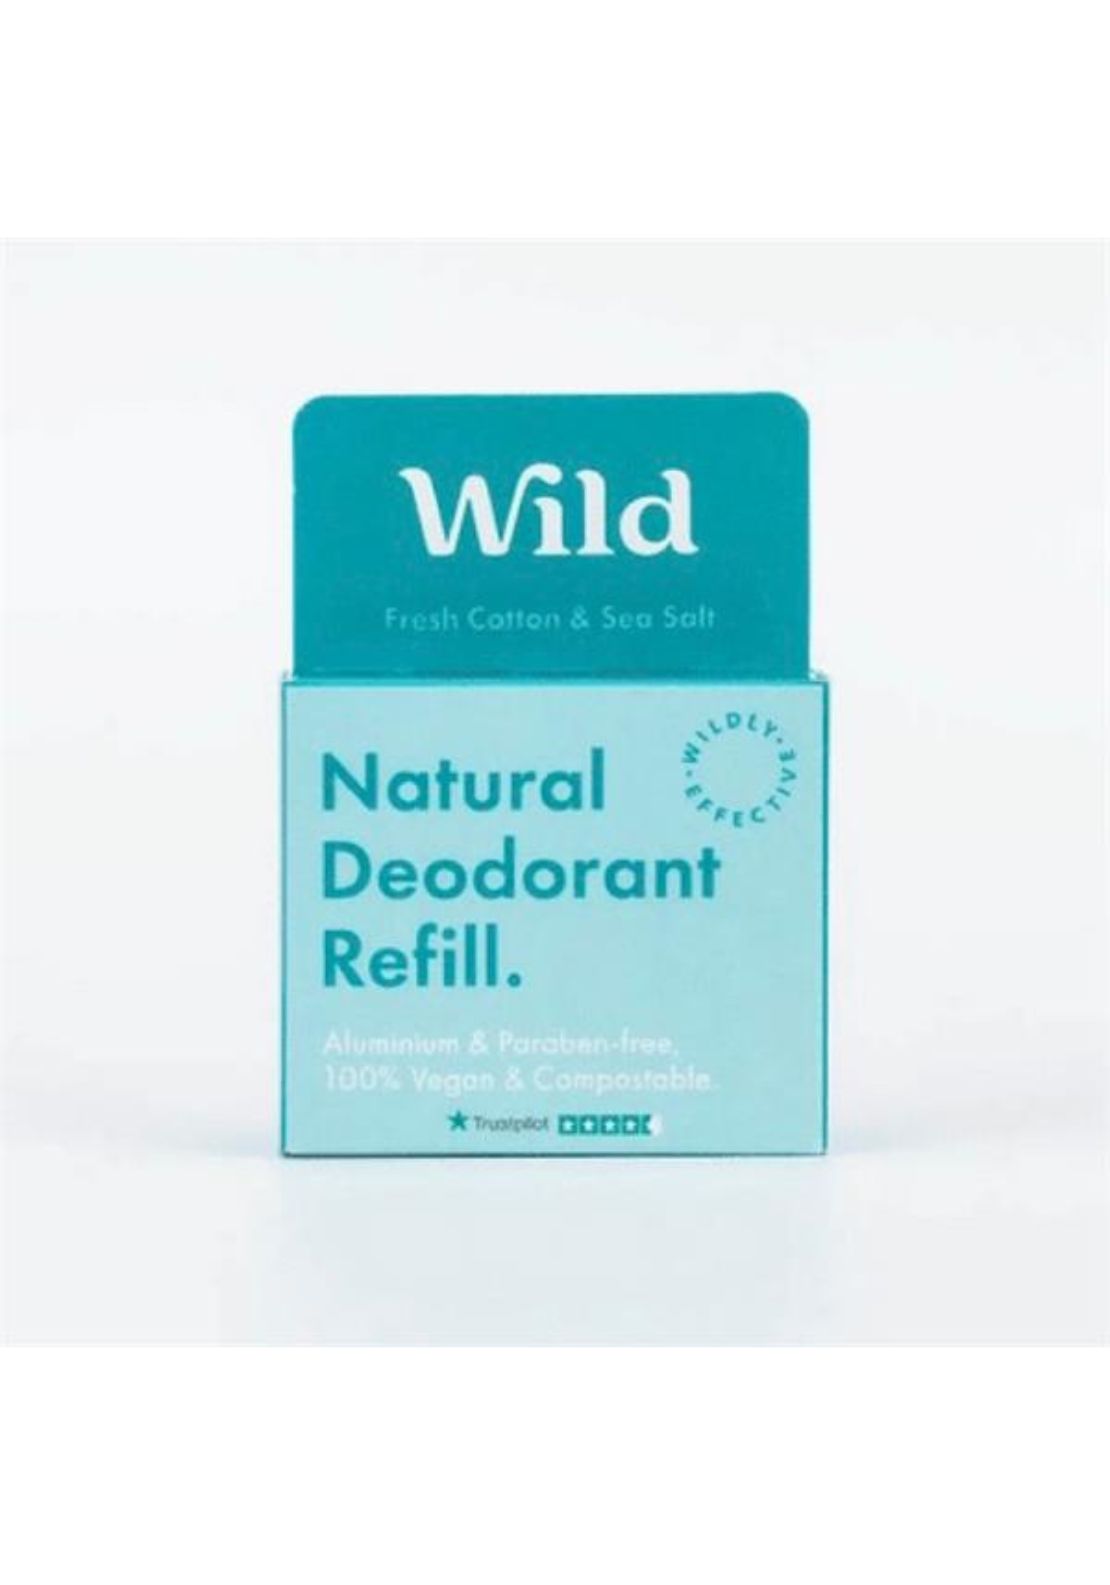 Wild Fresh Cotton And Sea Salt Refill Deodorant 1 Shaws Department Stores